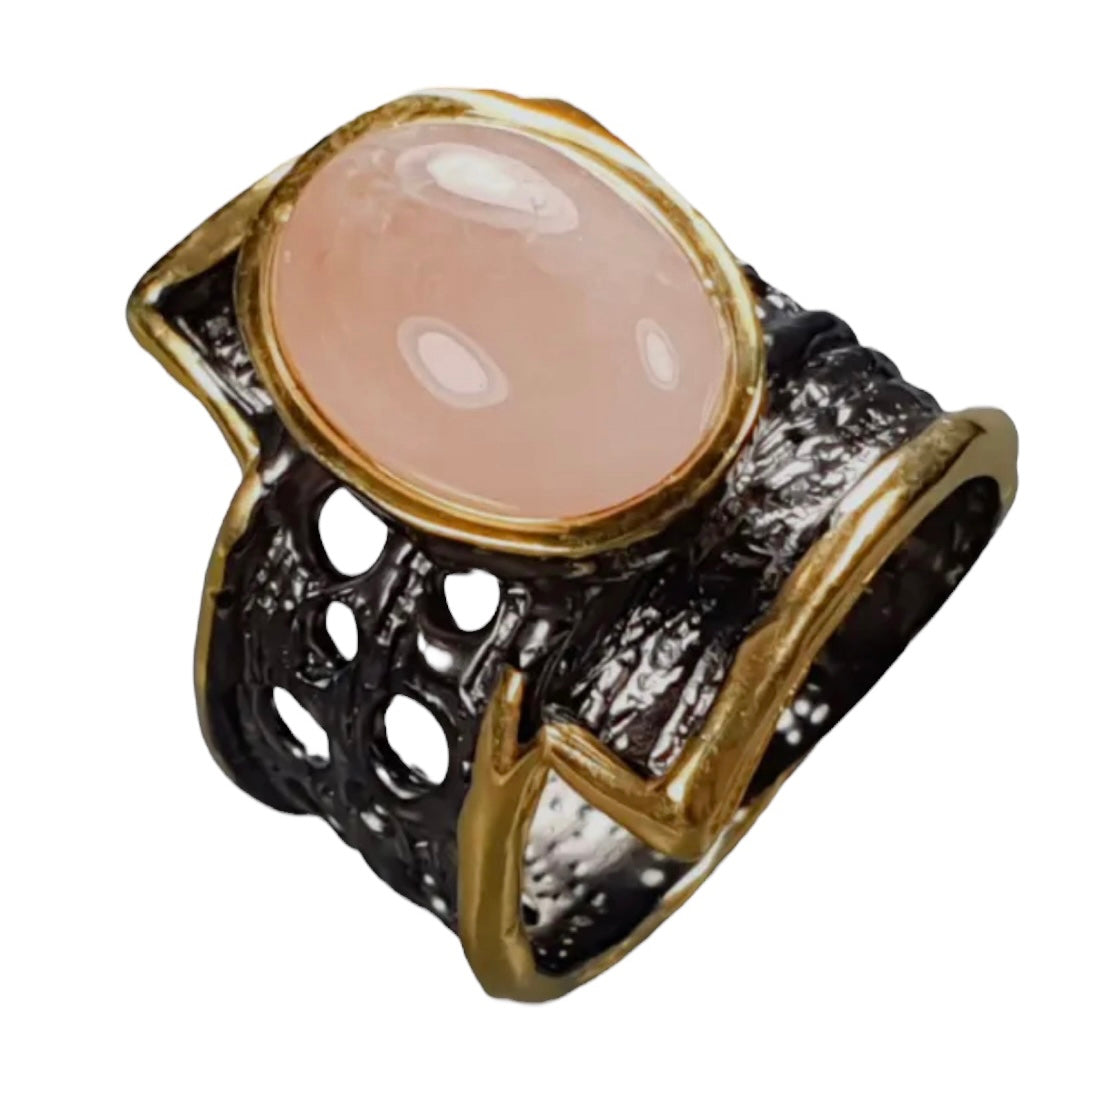 Morganite Sterling Silver Rhodium & Gold Industrial Ring - Keja Designs Jewelry